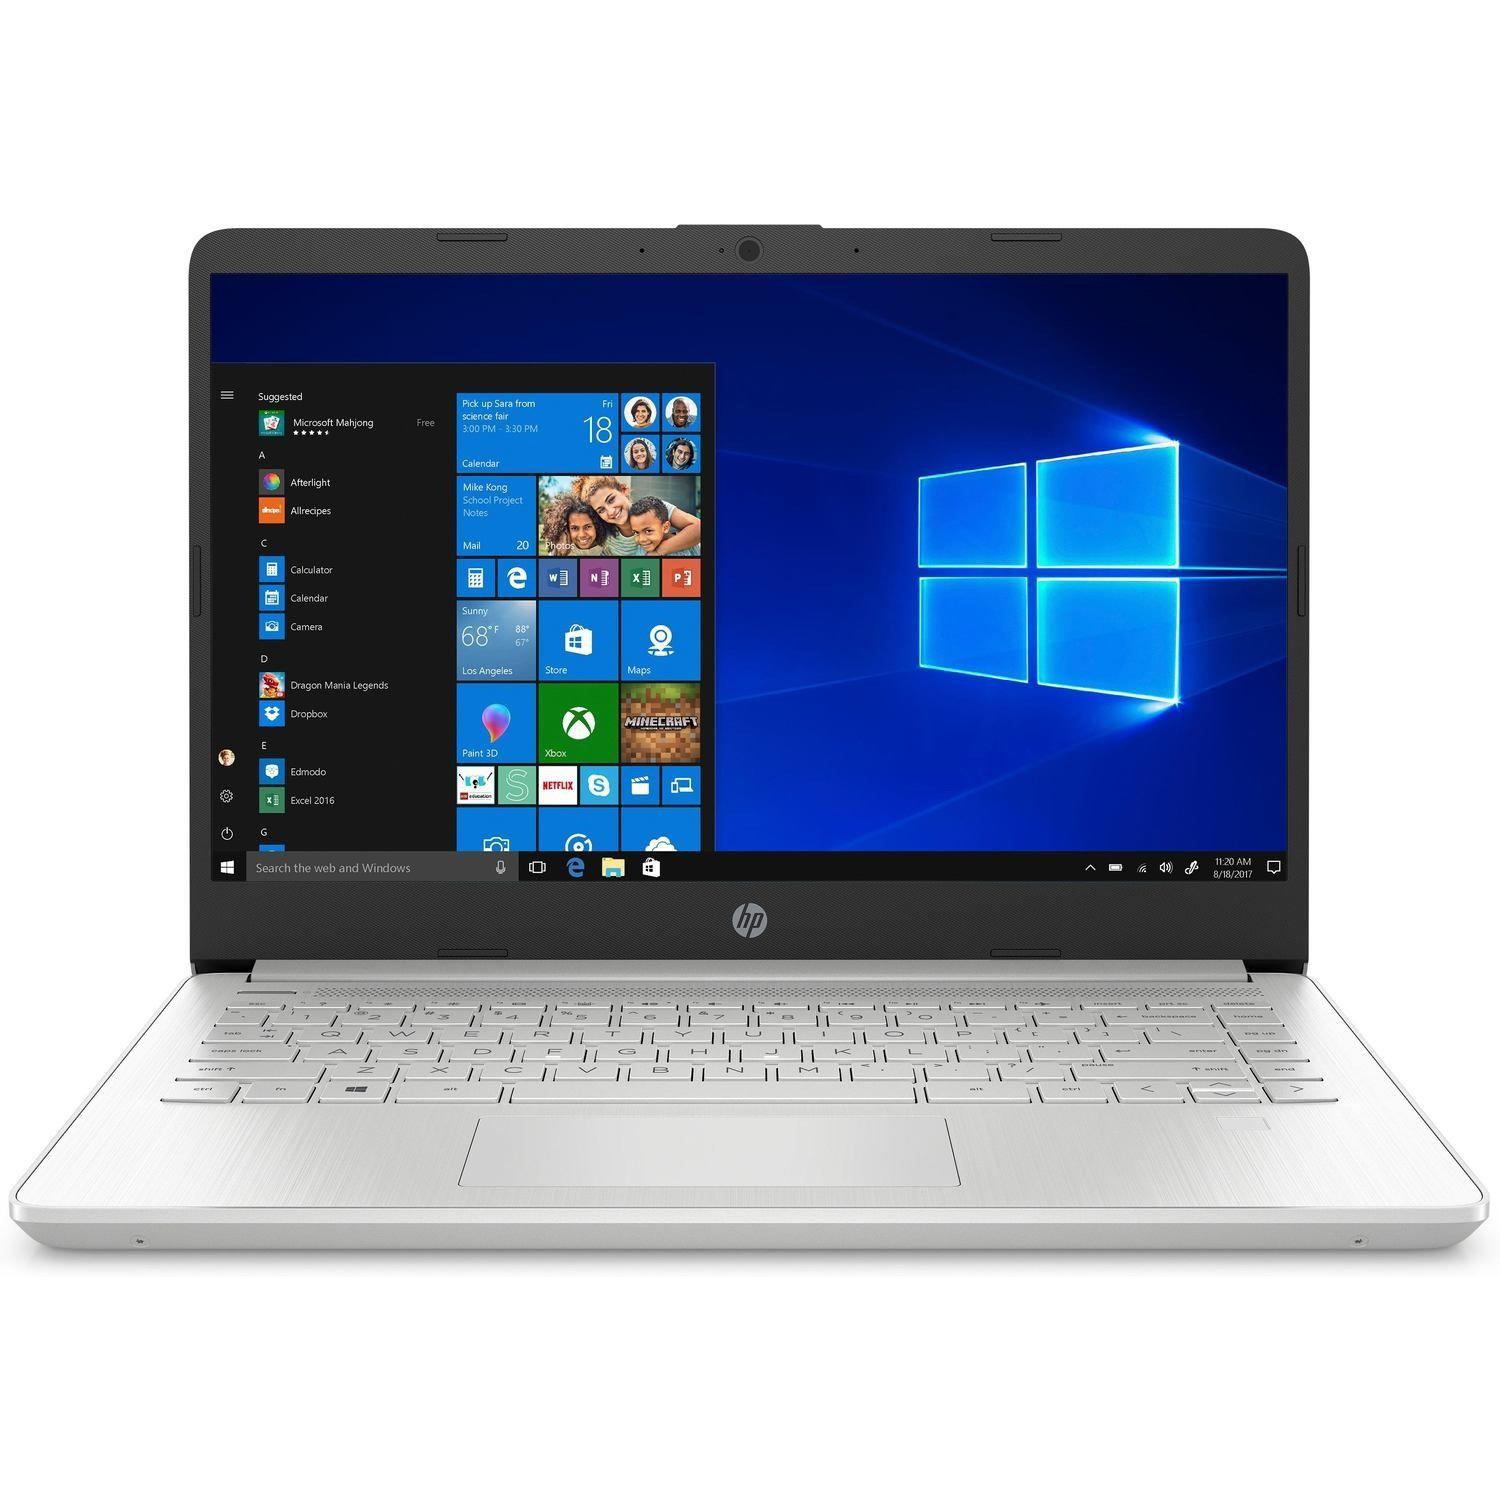 HP 14s-dq0003na Laptop, Intel Core i3 Processor, 8GB RAM, 128GB SSD, 14" Full HD, Natural Silver 7DM06EA#ABU